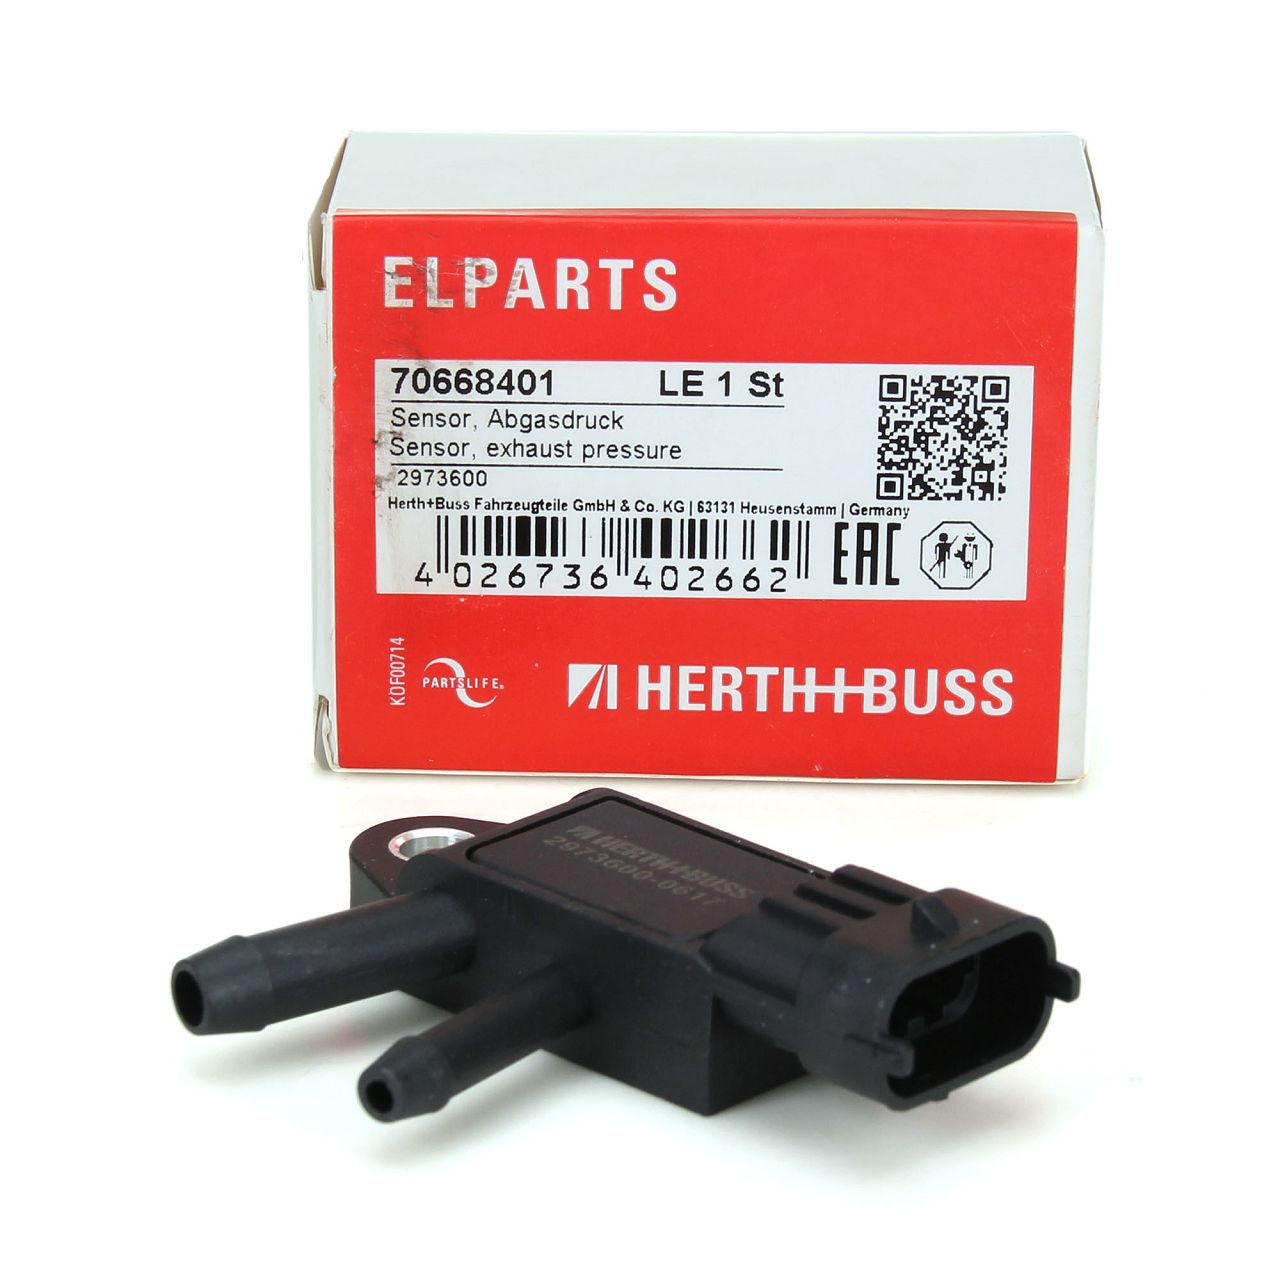 HERTH+BUSS ELPARTS Abgasdrucksensor 70668401 für ALFA ROMEO FIAT LANCIA OPEL